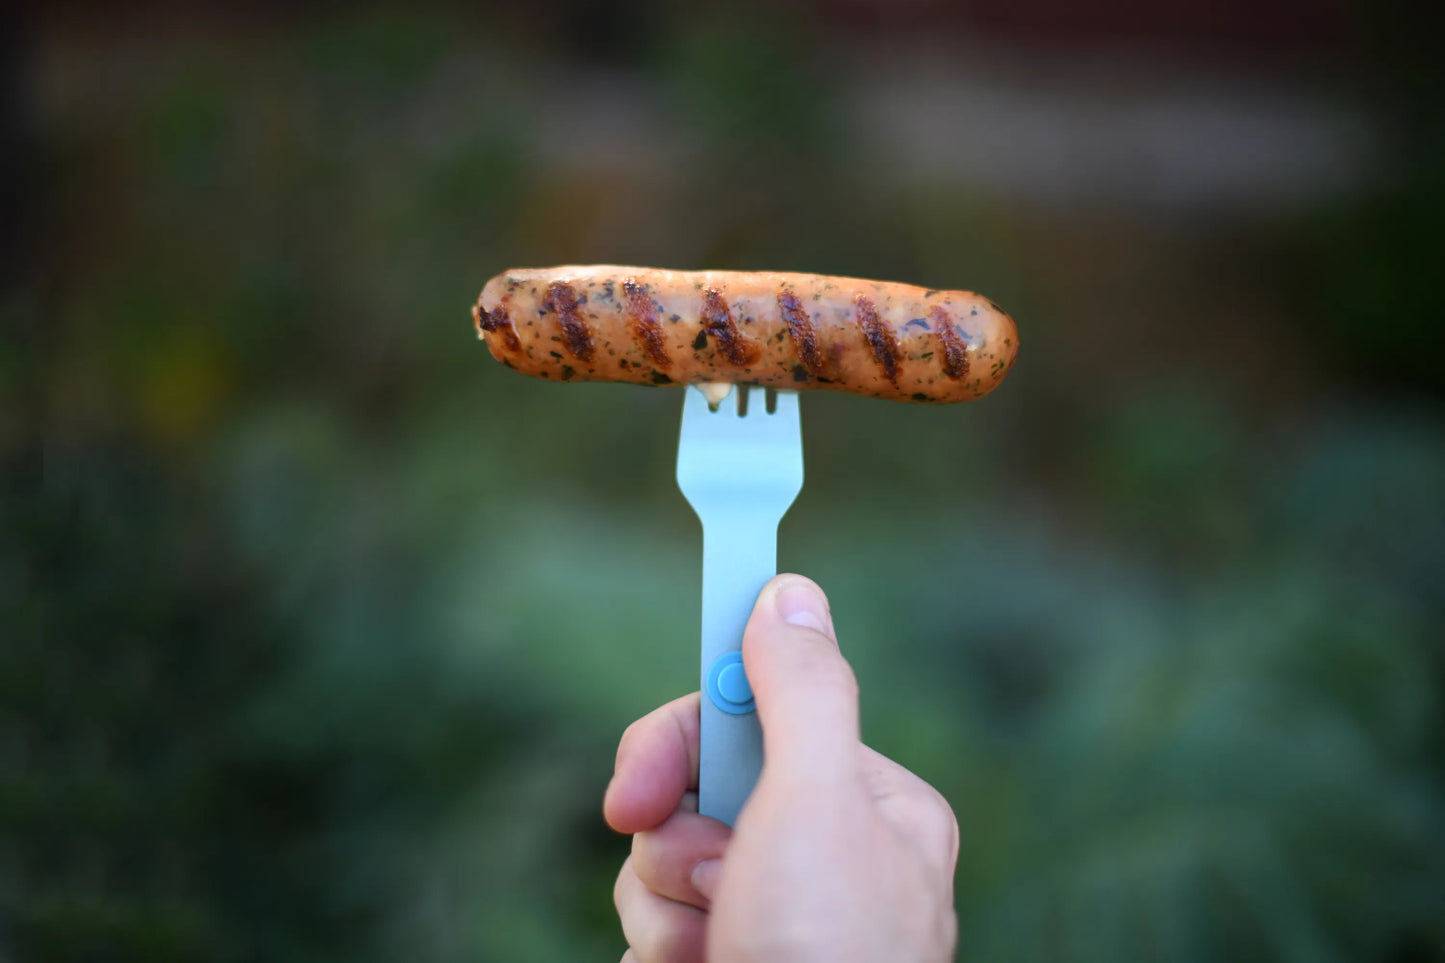 Turquoise fork holding a hotdog.